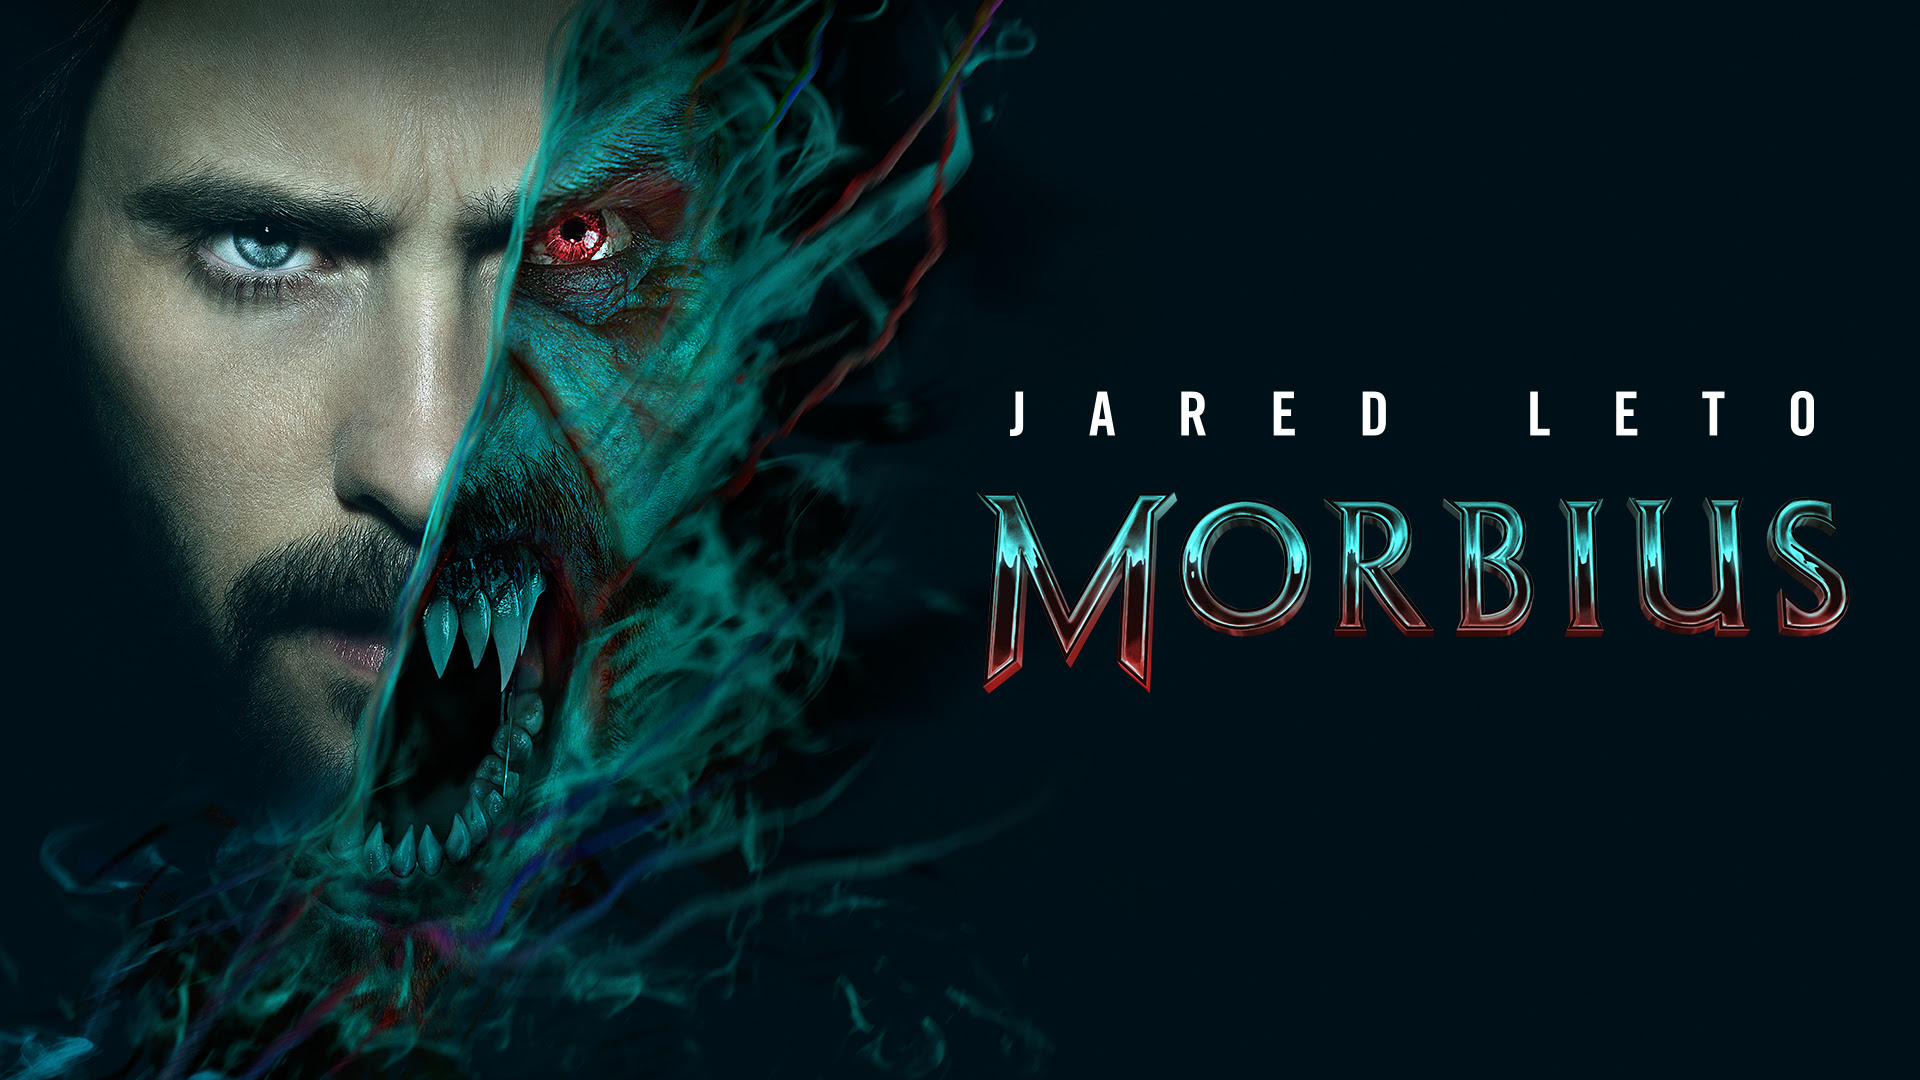 Jared Leto Hd Morbius Movie Wallpapers